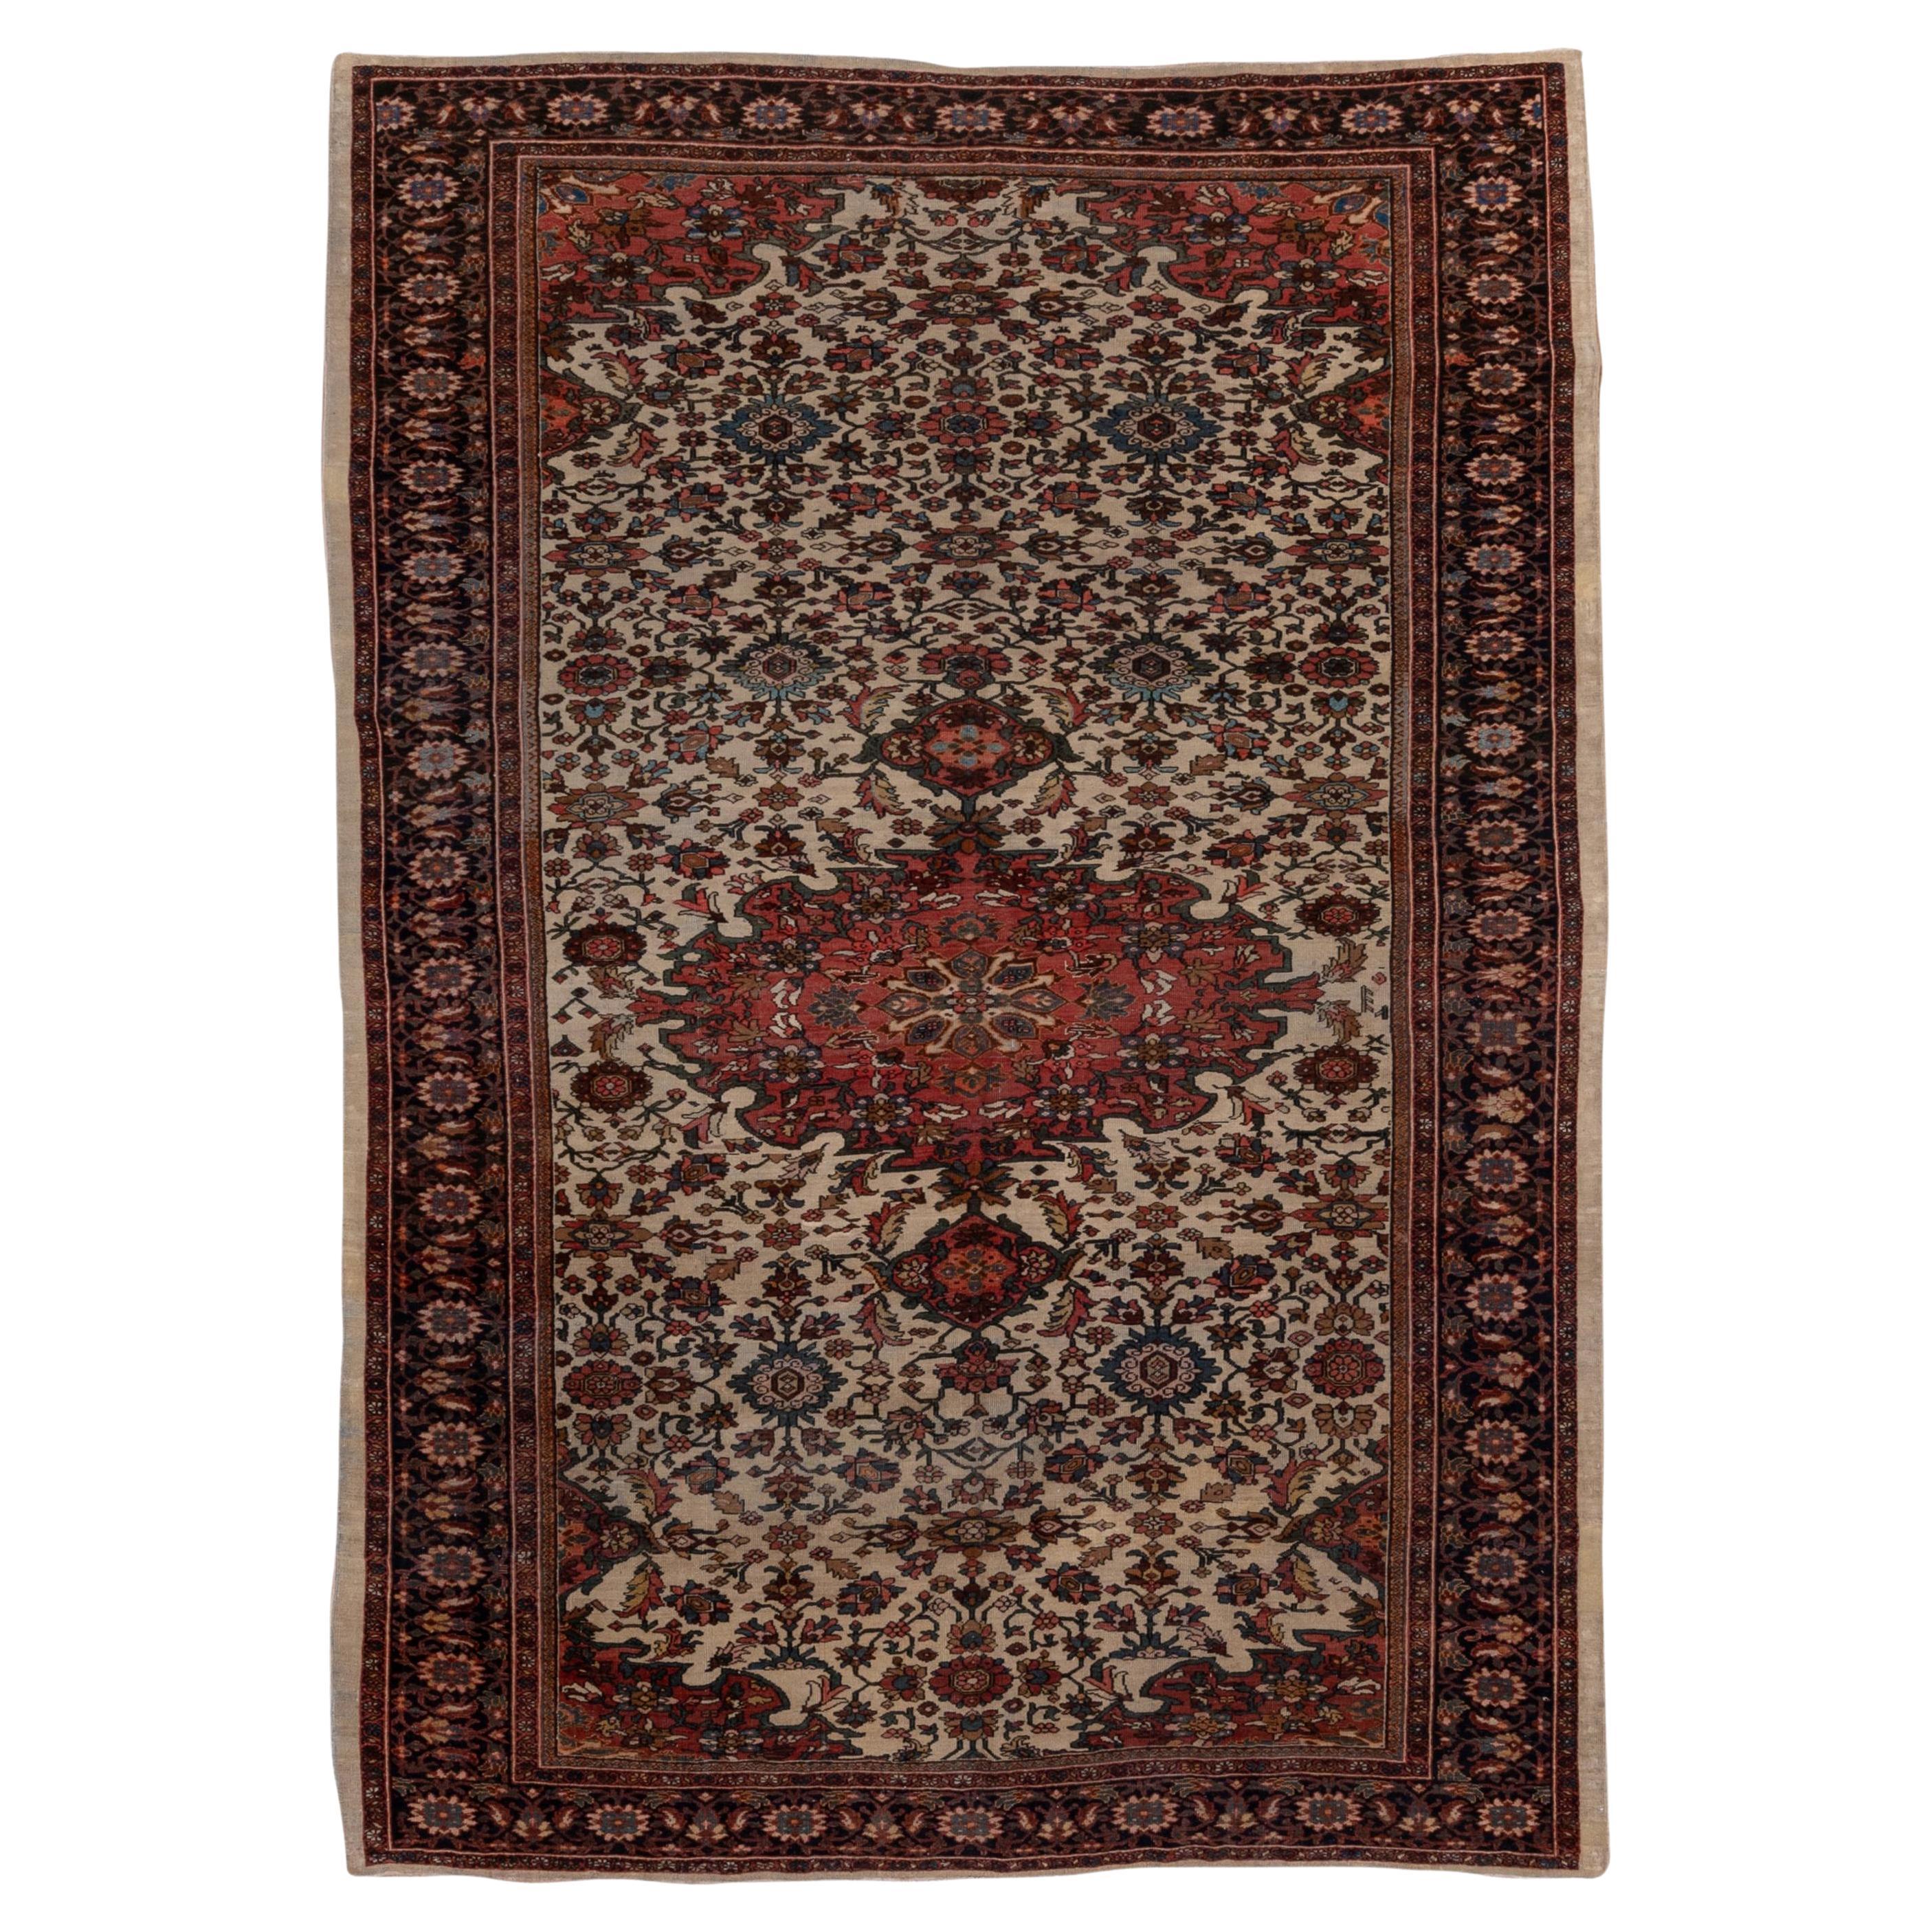 Finely Woven Antique Persian Farahan Sarouk Carpet, Ivory Field, Dark Borders